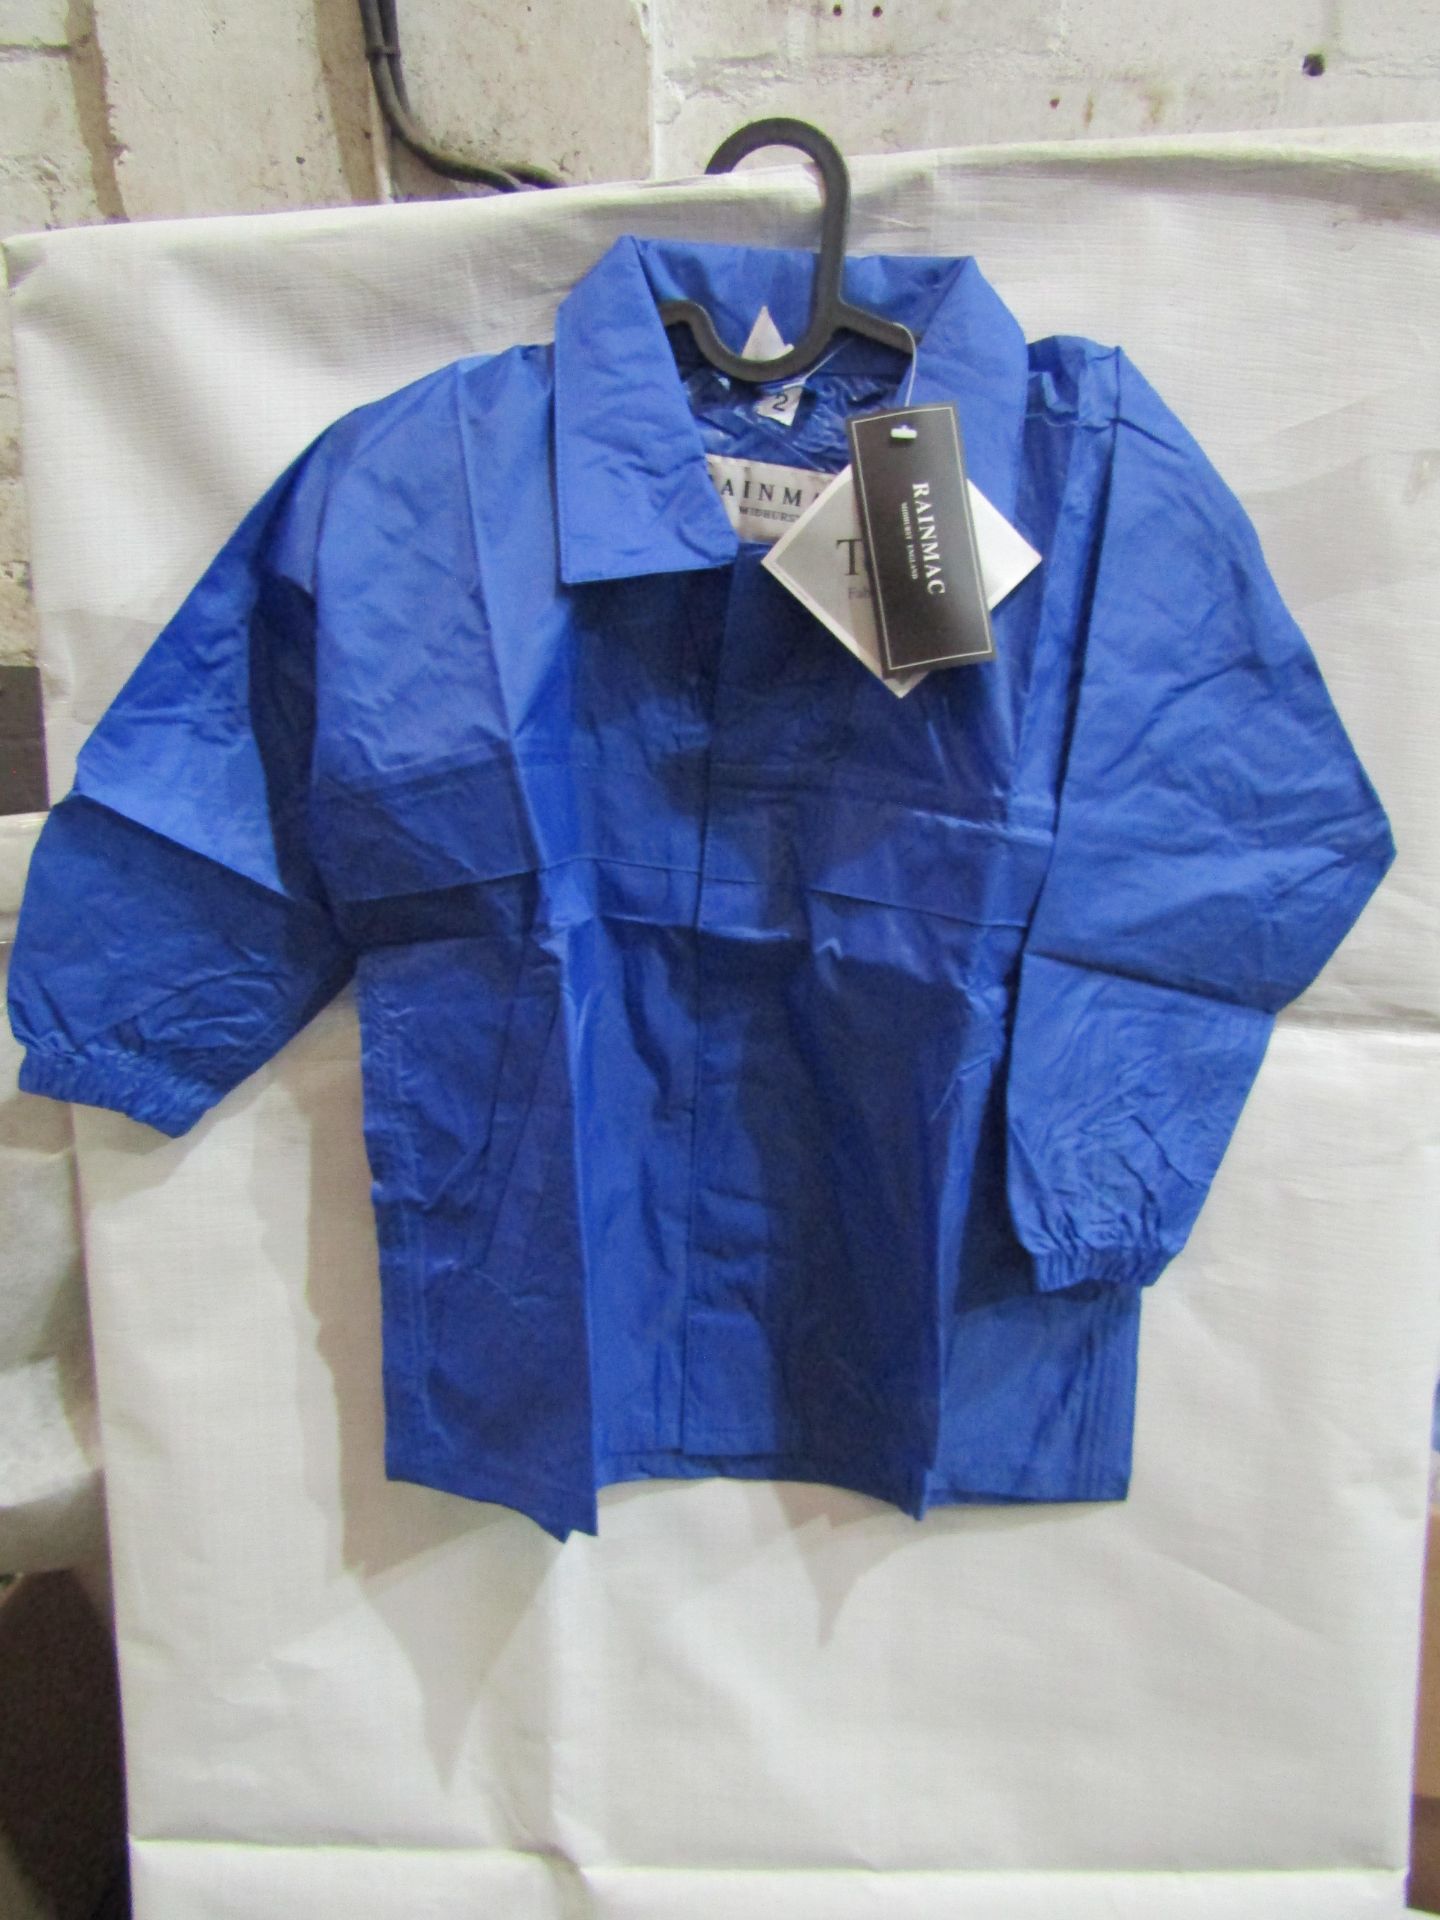 Rainmac Childrens Blue Thin Rain Coat, Size: 2 - Unused & Packaged.